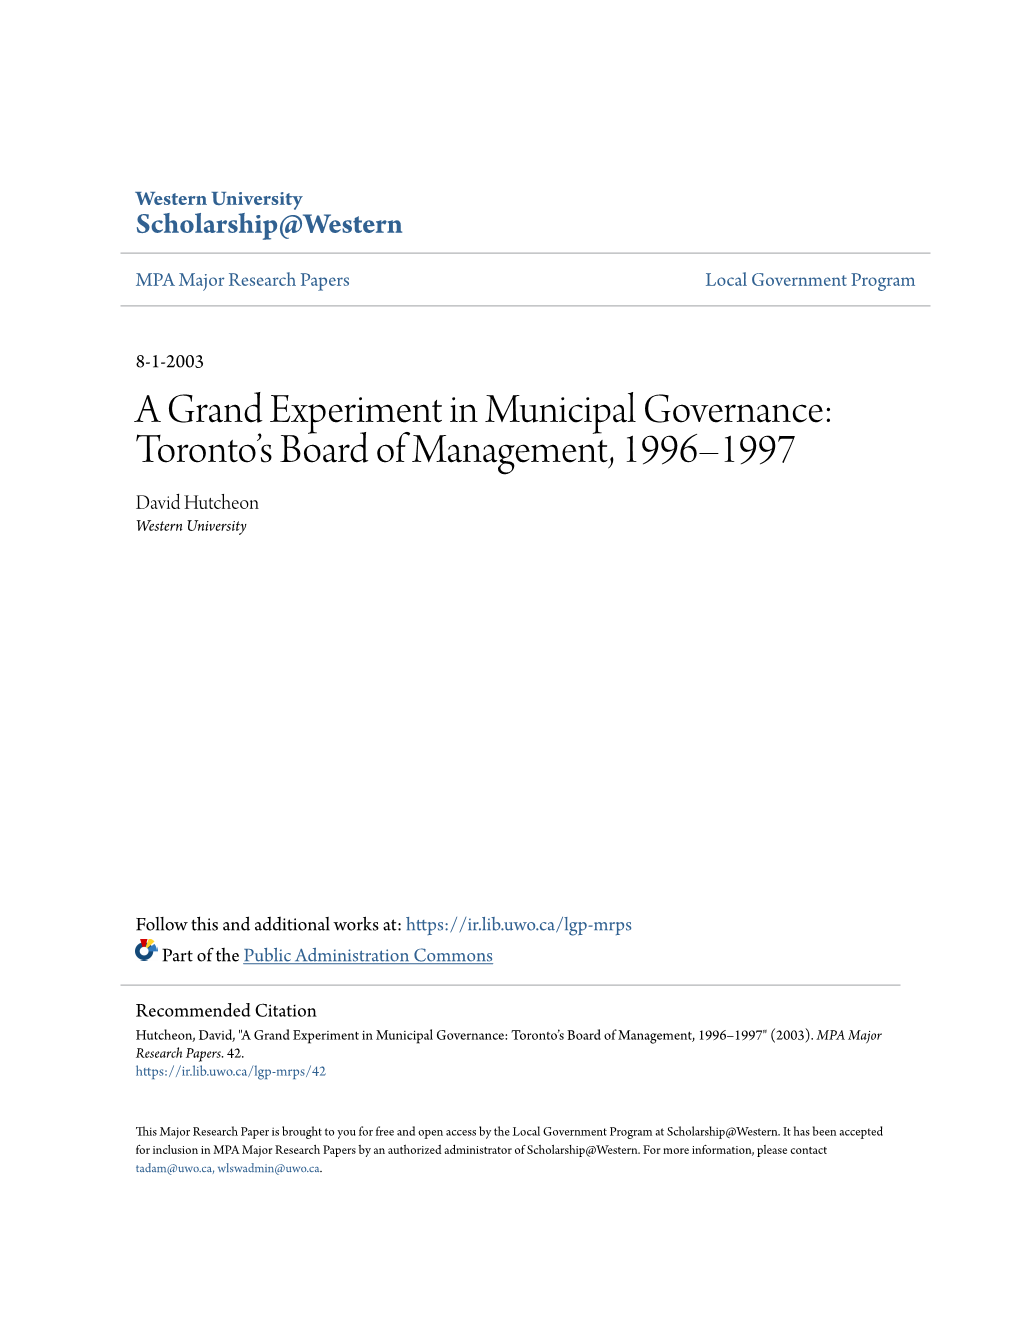 A Grand Experiment in Municipal Governance: Toronto’S Board of Management, 1996–1997 David Hutcheon Western University